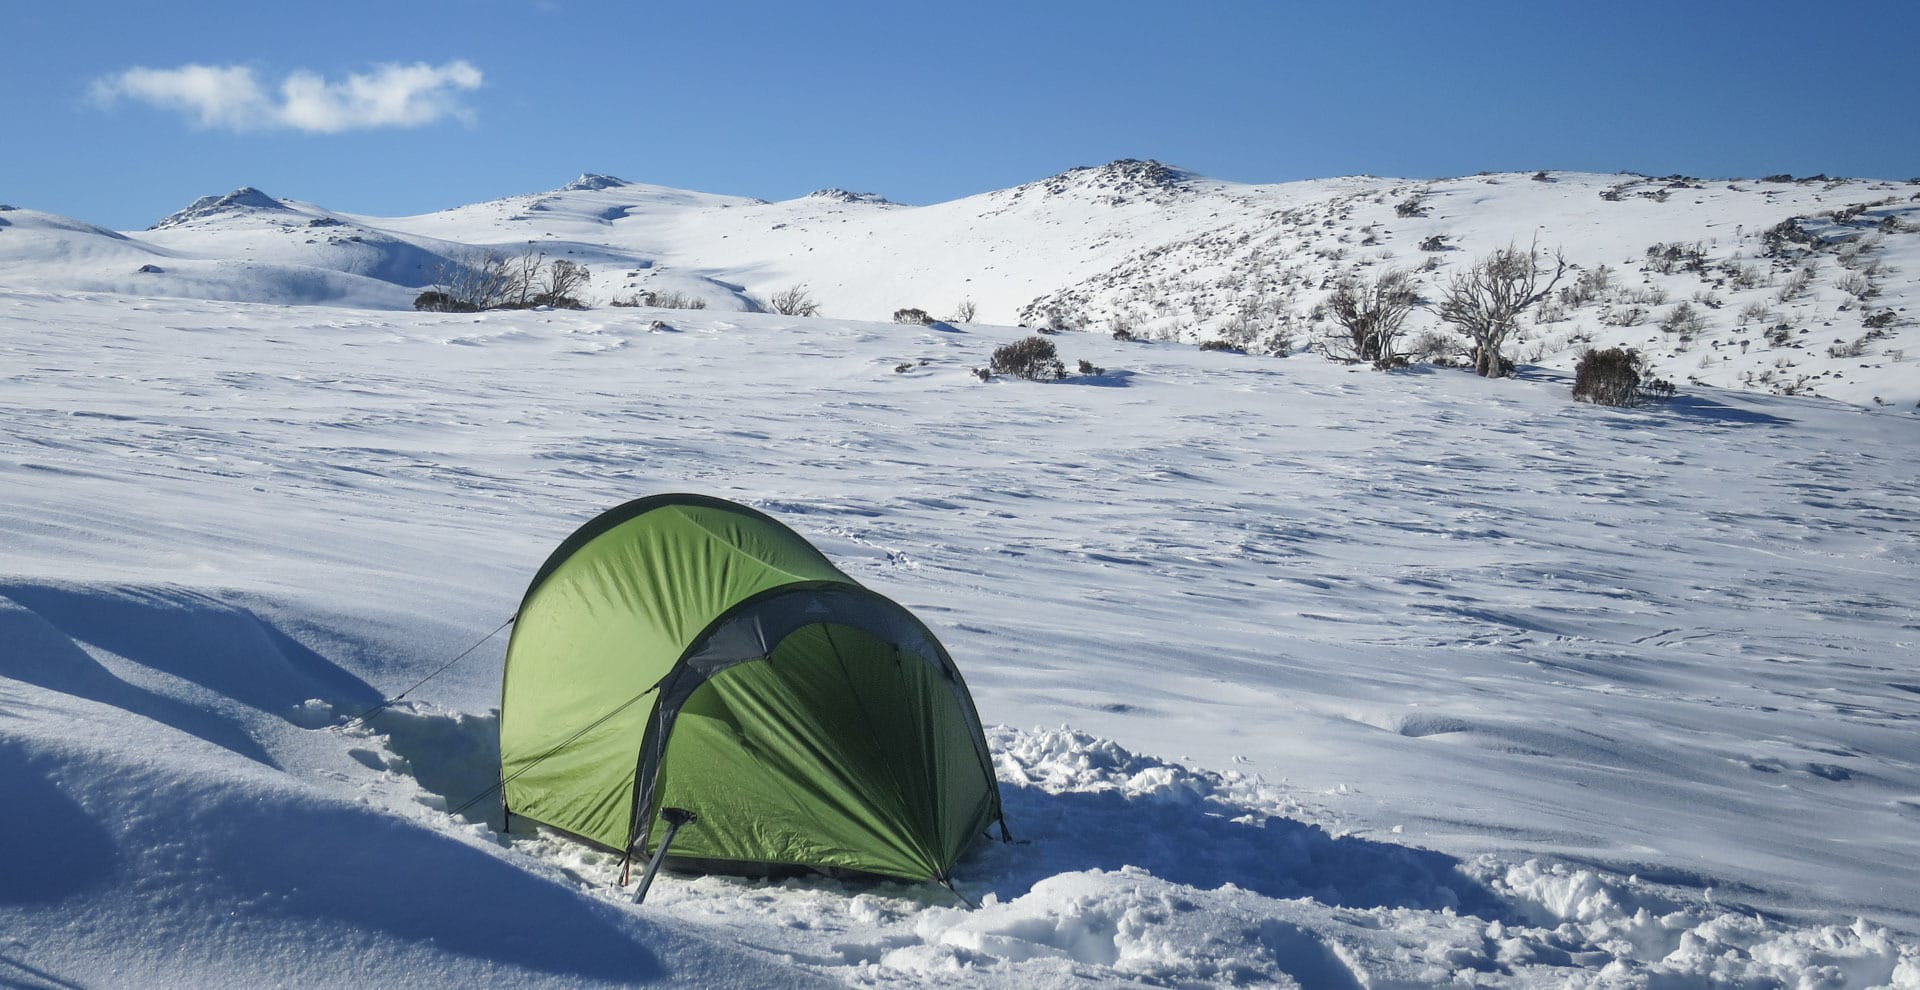 Wilderness Equipment Second Arrow Ultralight Tent – Gear Review, robbie baudish, backcountry, snow camping, kosciuszko, nsw